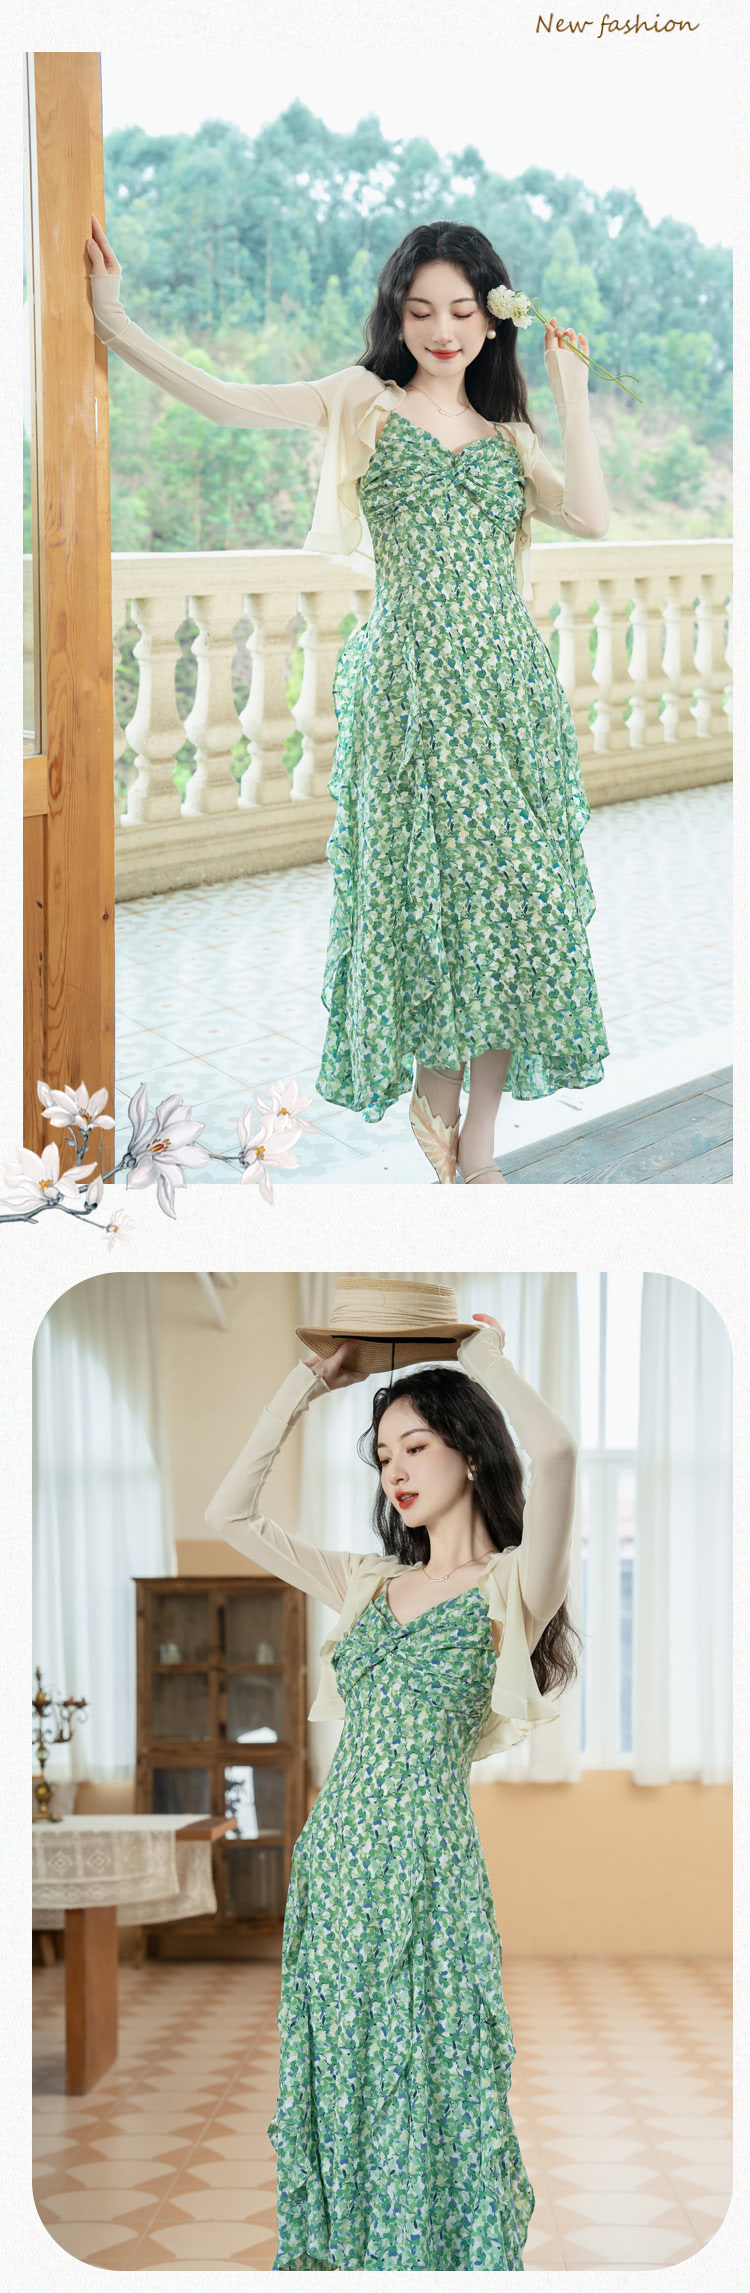 A-Line-Green-Print-Summer-Beach-Casual-Long-Dress-with-Cardigan10